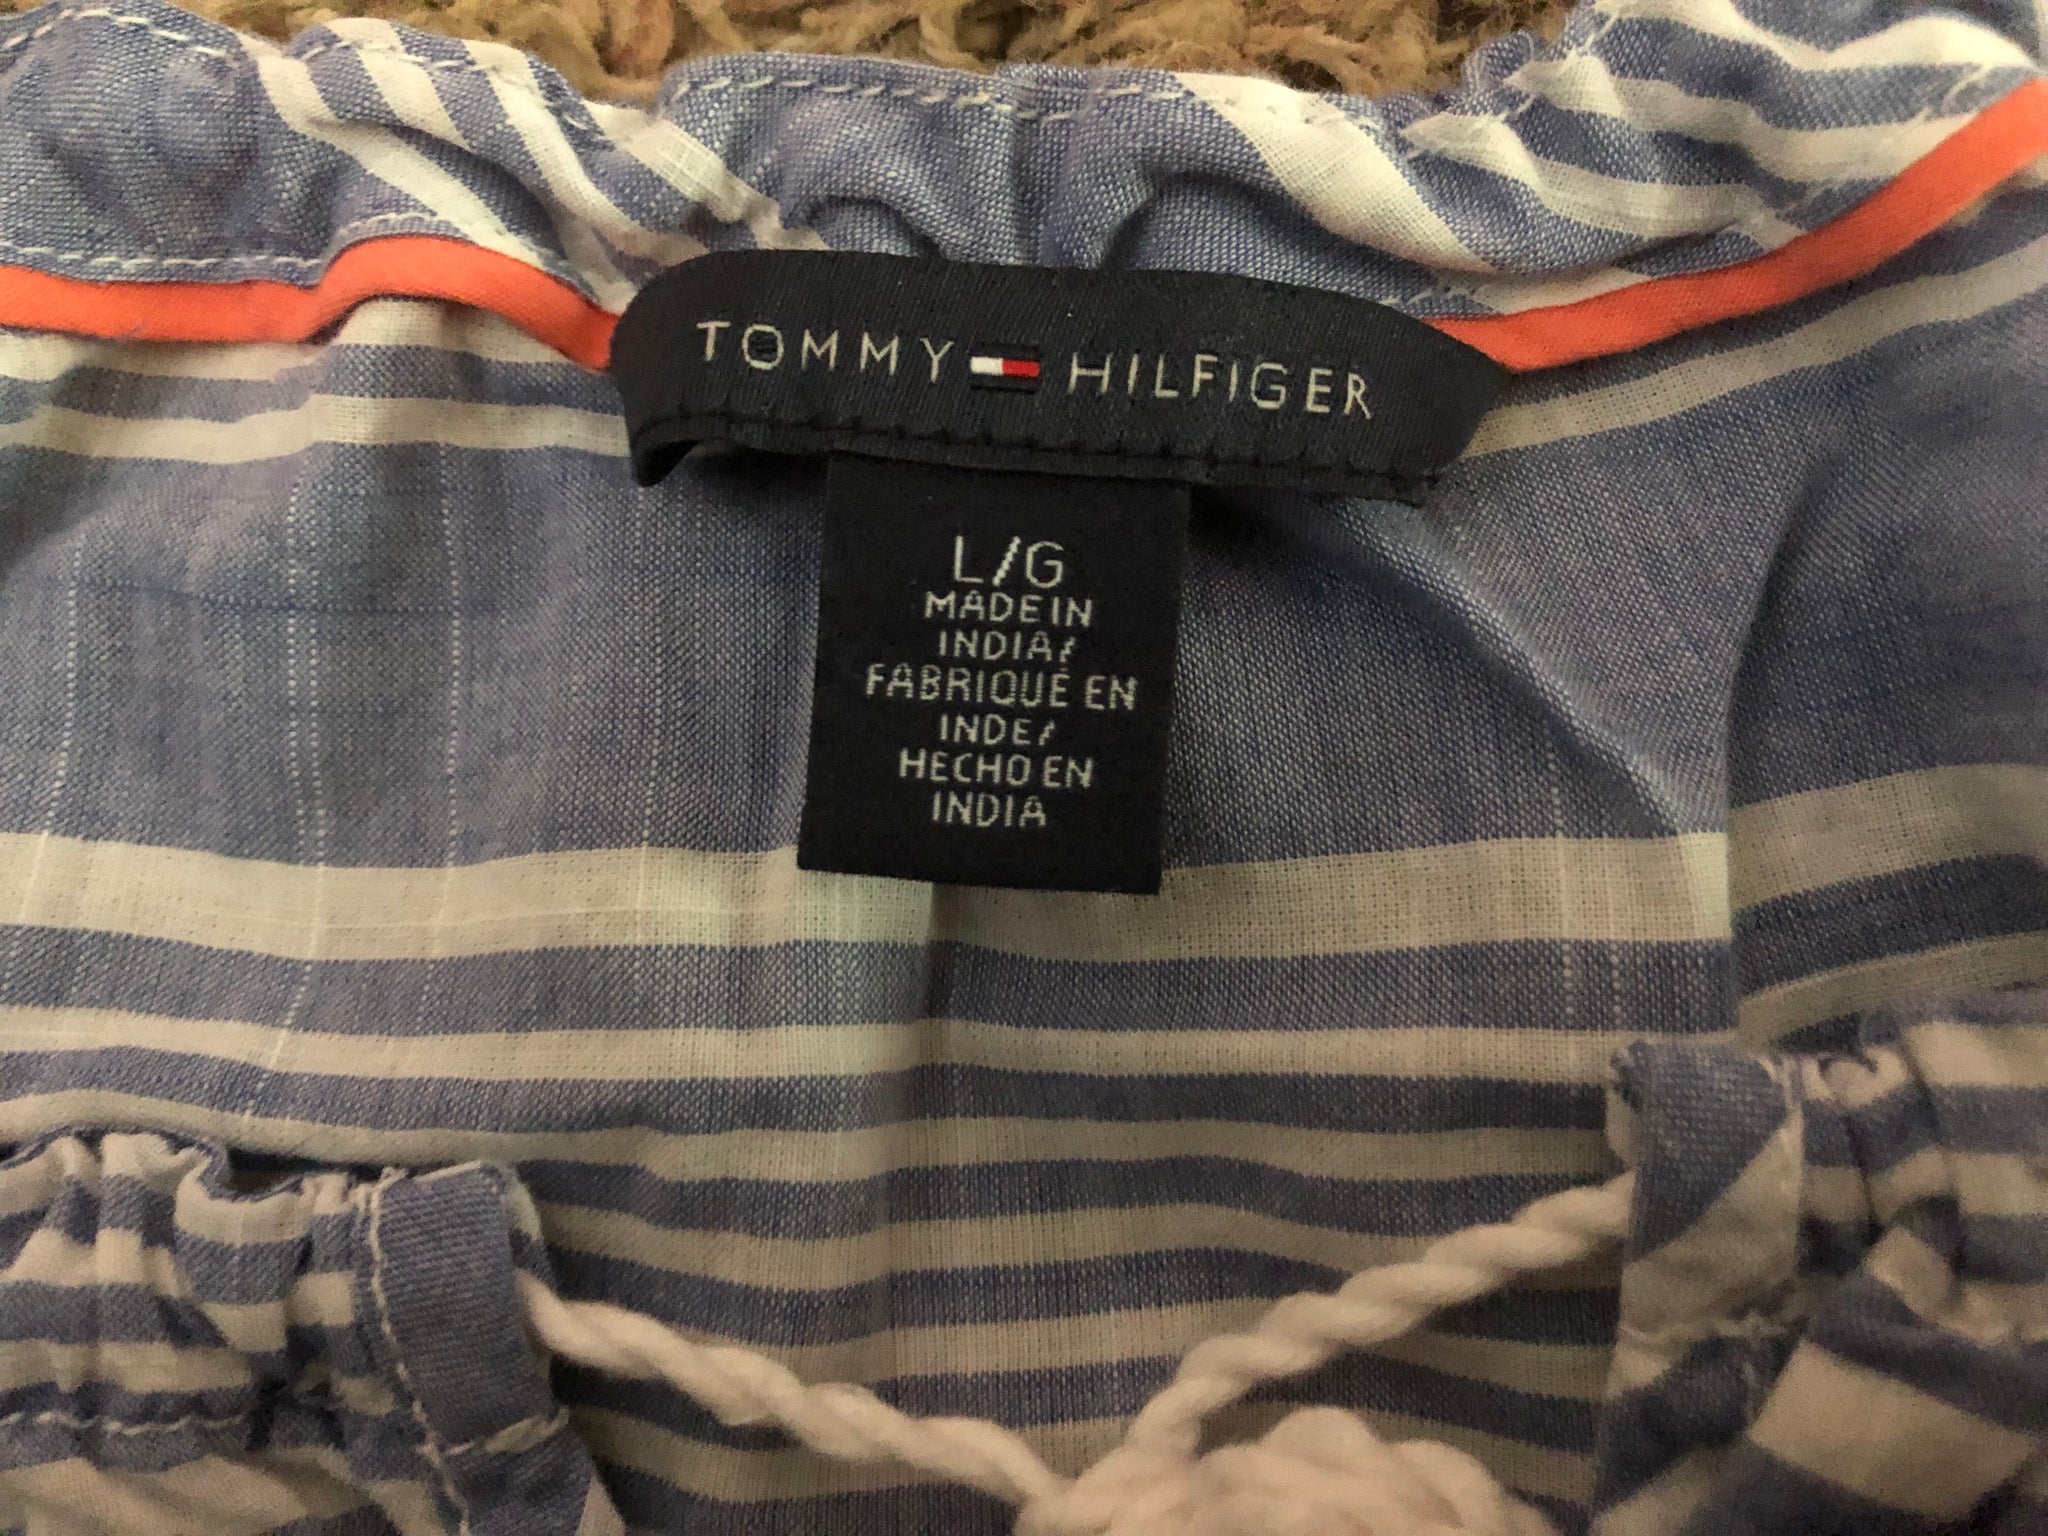 Tommy Hilfiger striped top